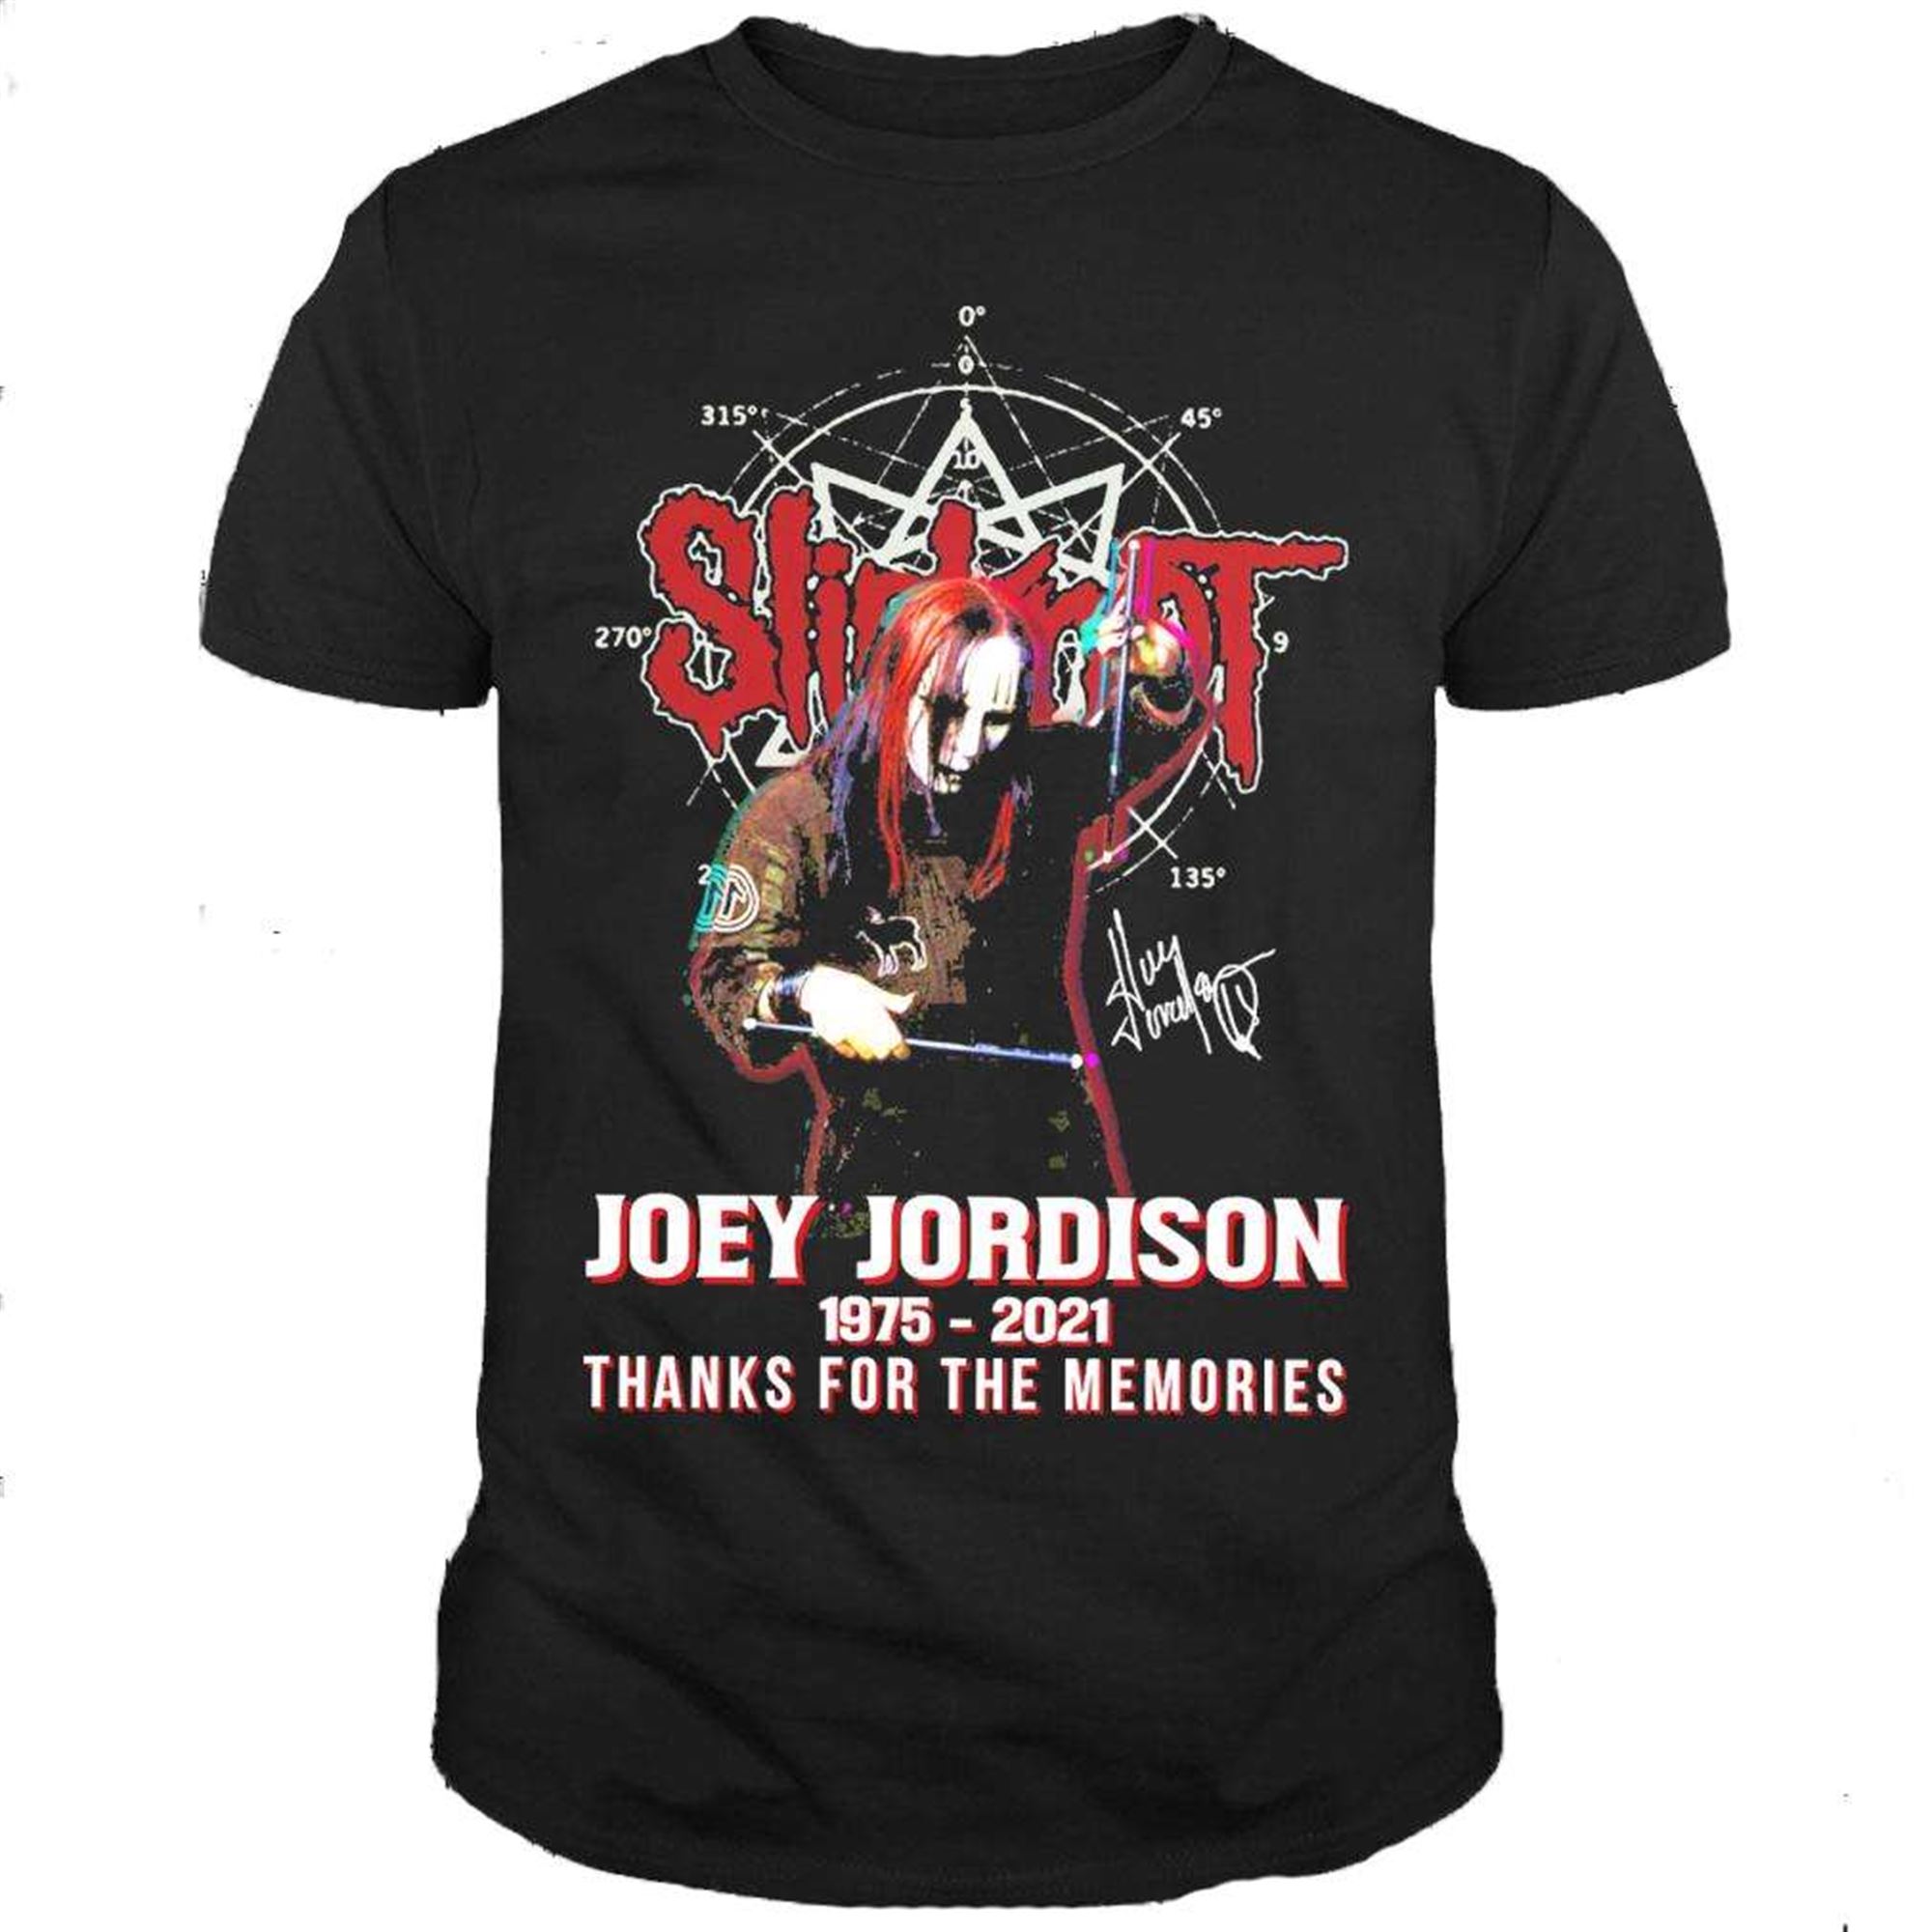 Rip Slipknot Joey Jordison 1975-2021 Signatures Unisex T Shirt Full Size Up To 5xl